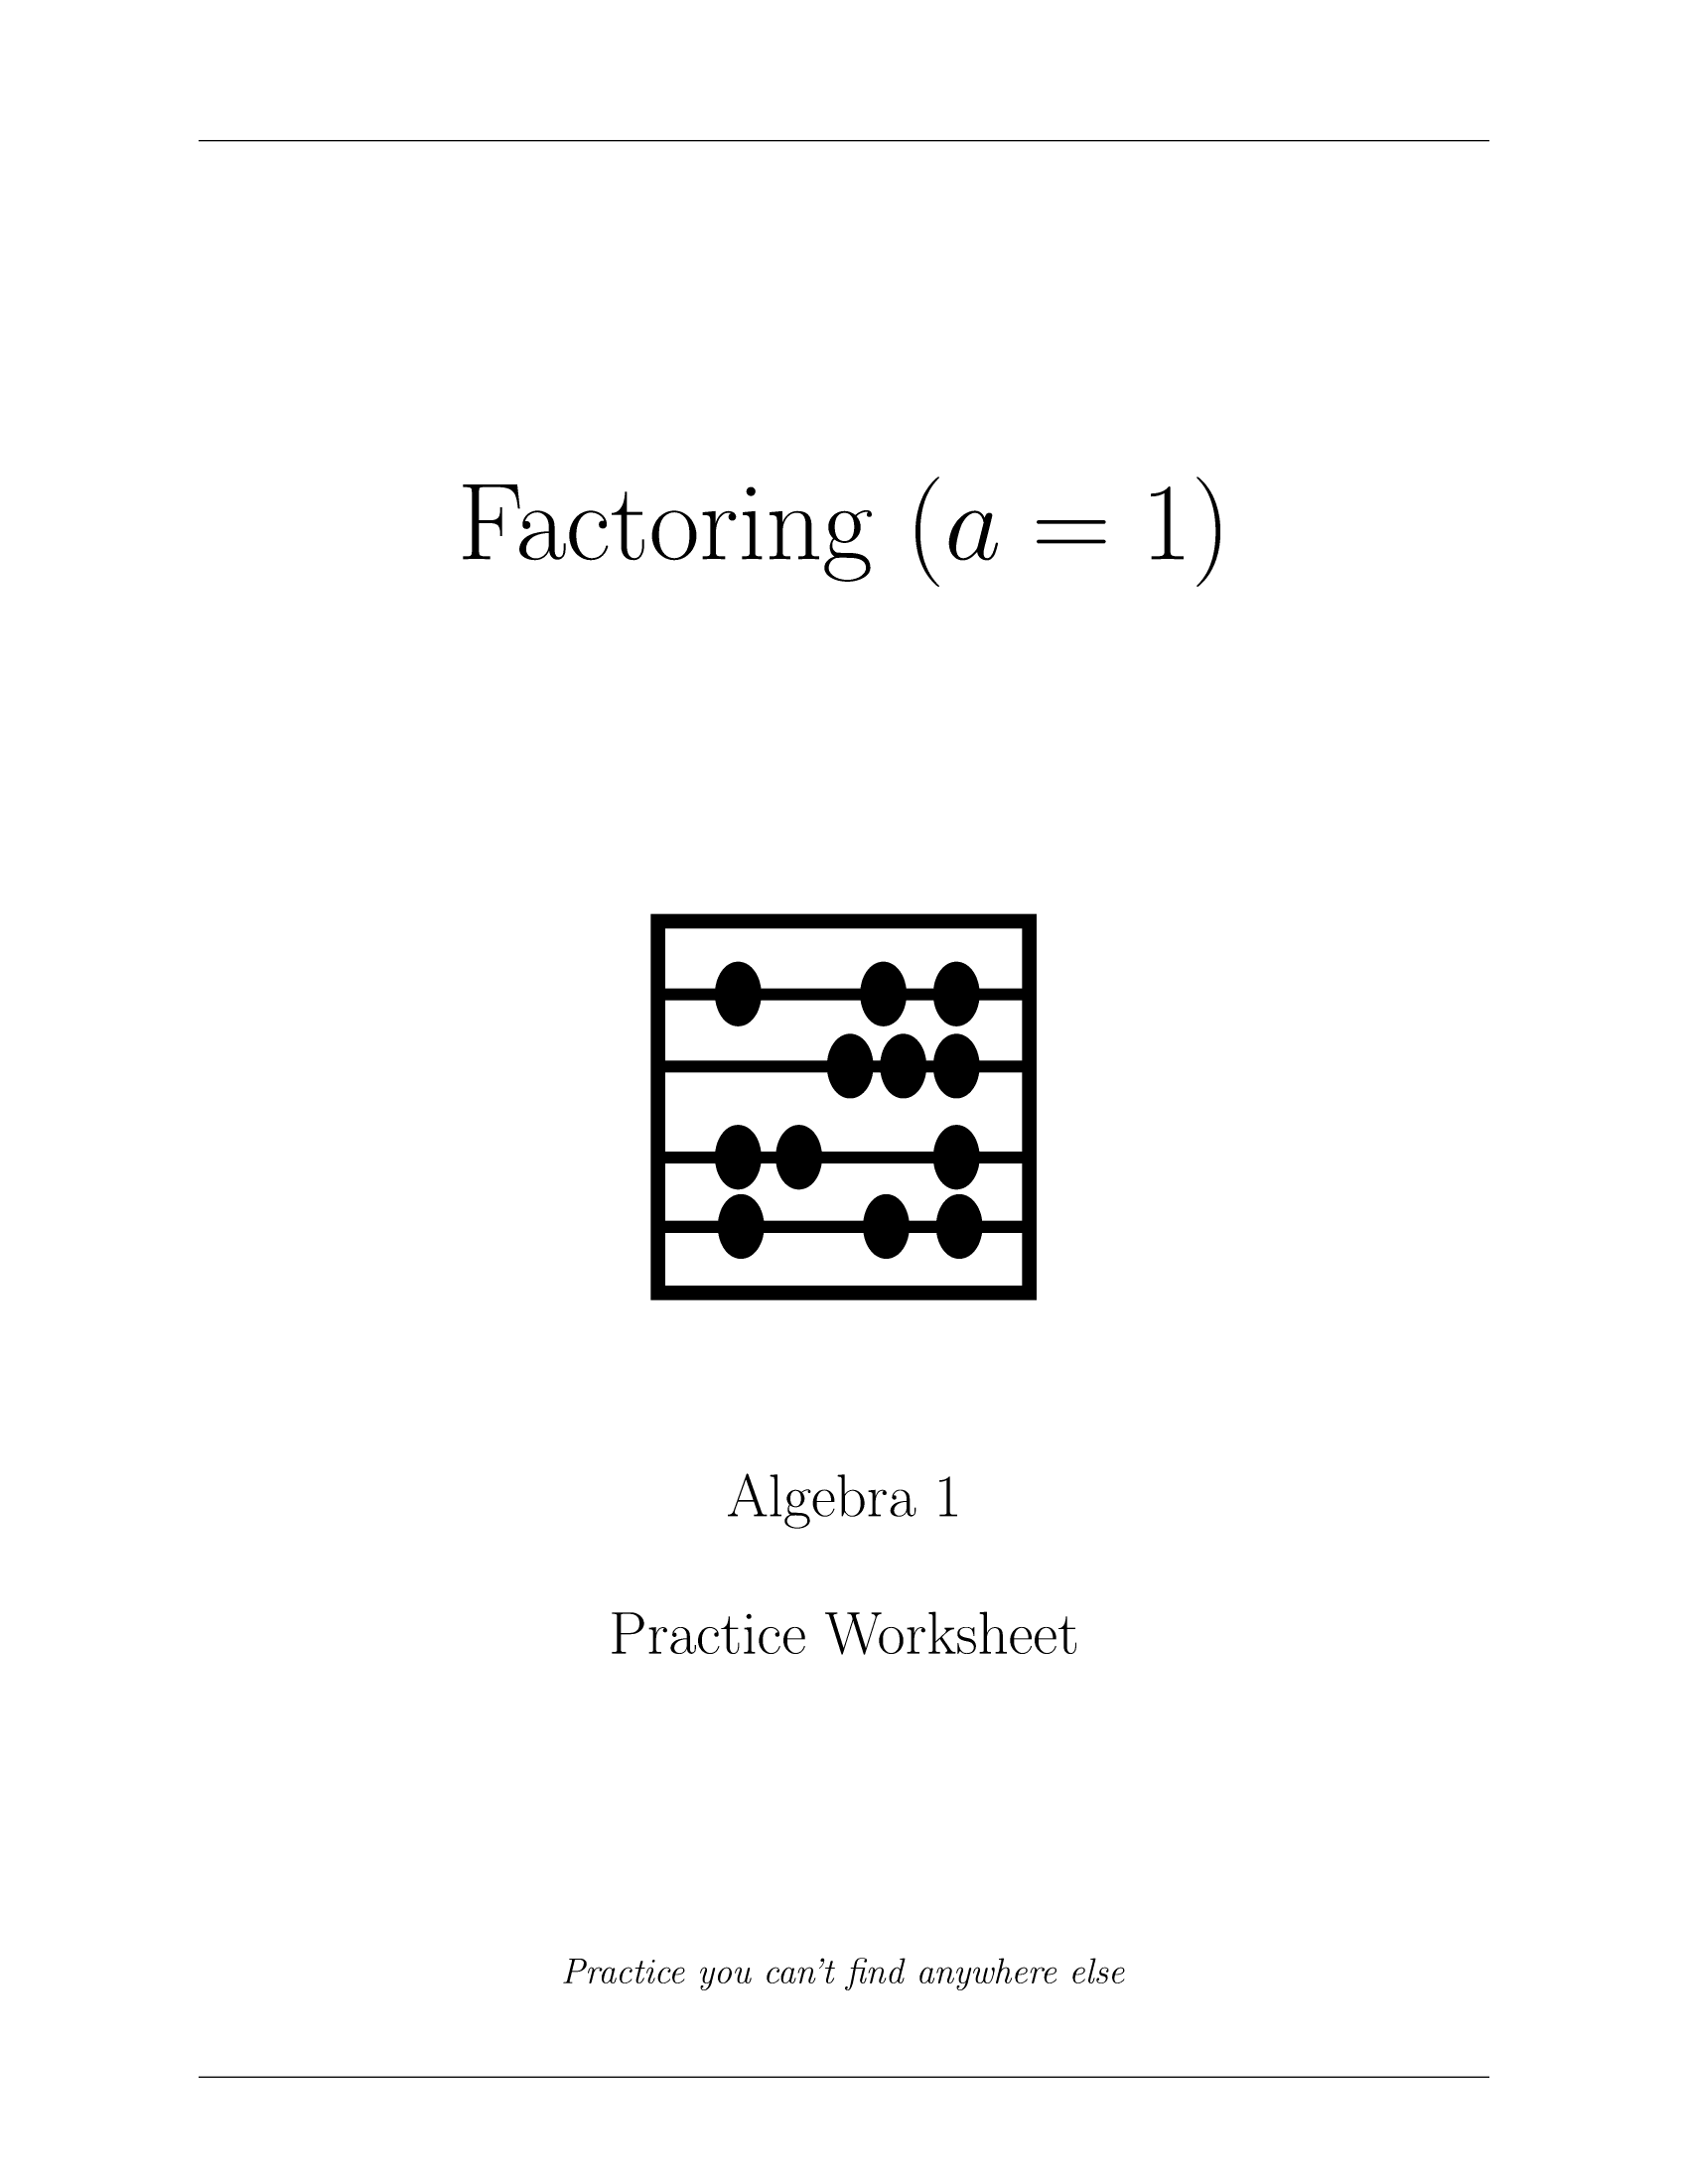 Factoring (a=1) Worksheet_1